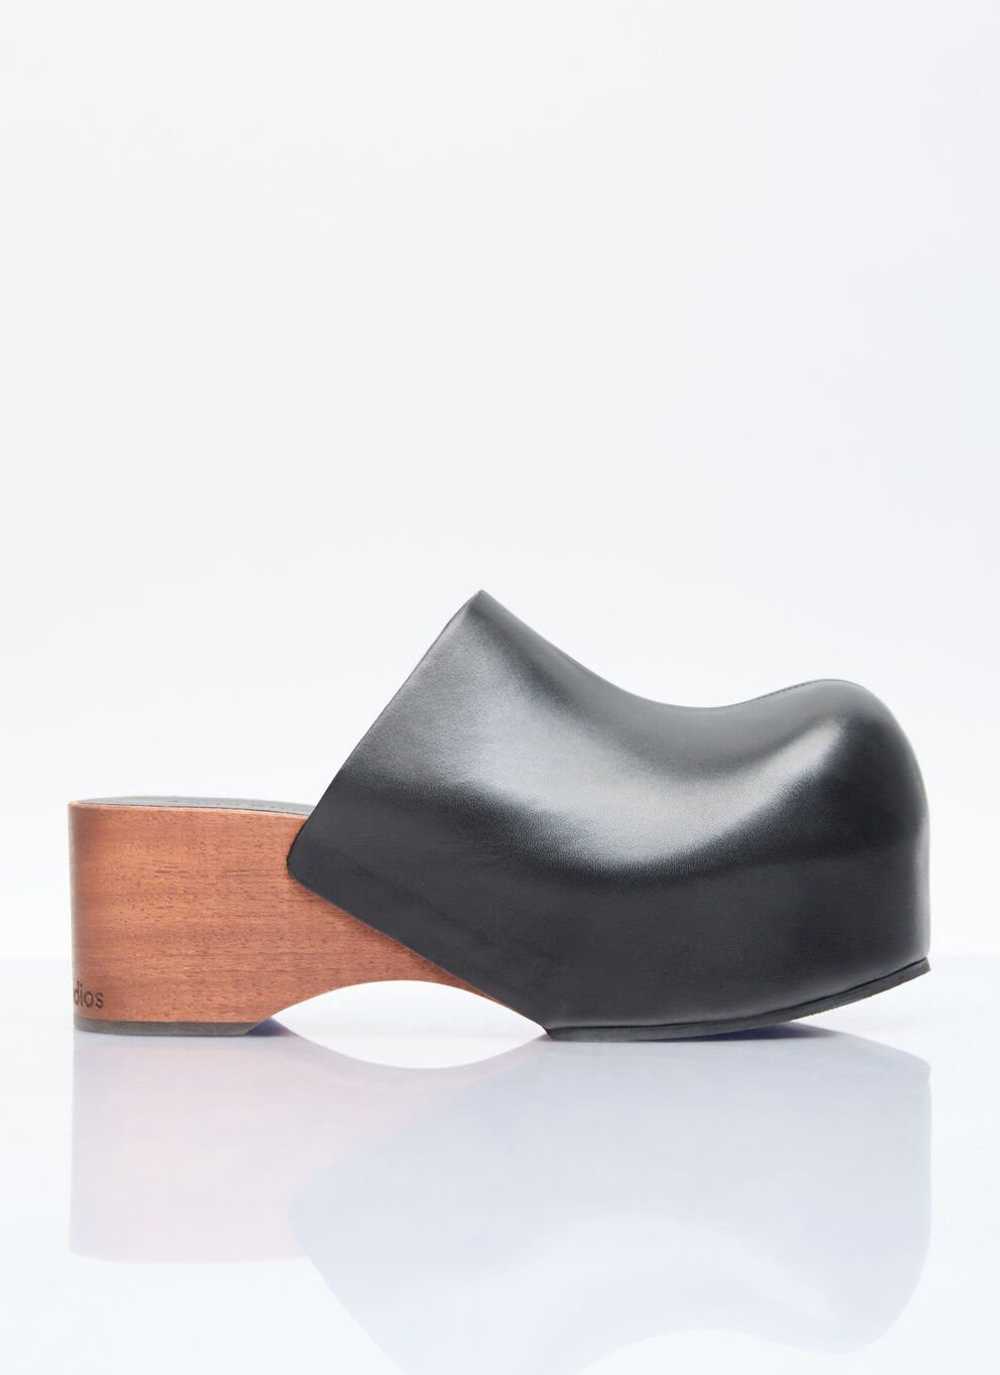 Acne Studios Leather Wood Clogs - image 1